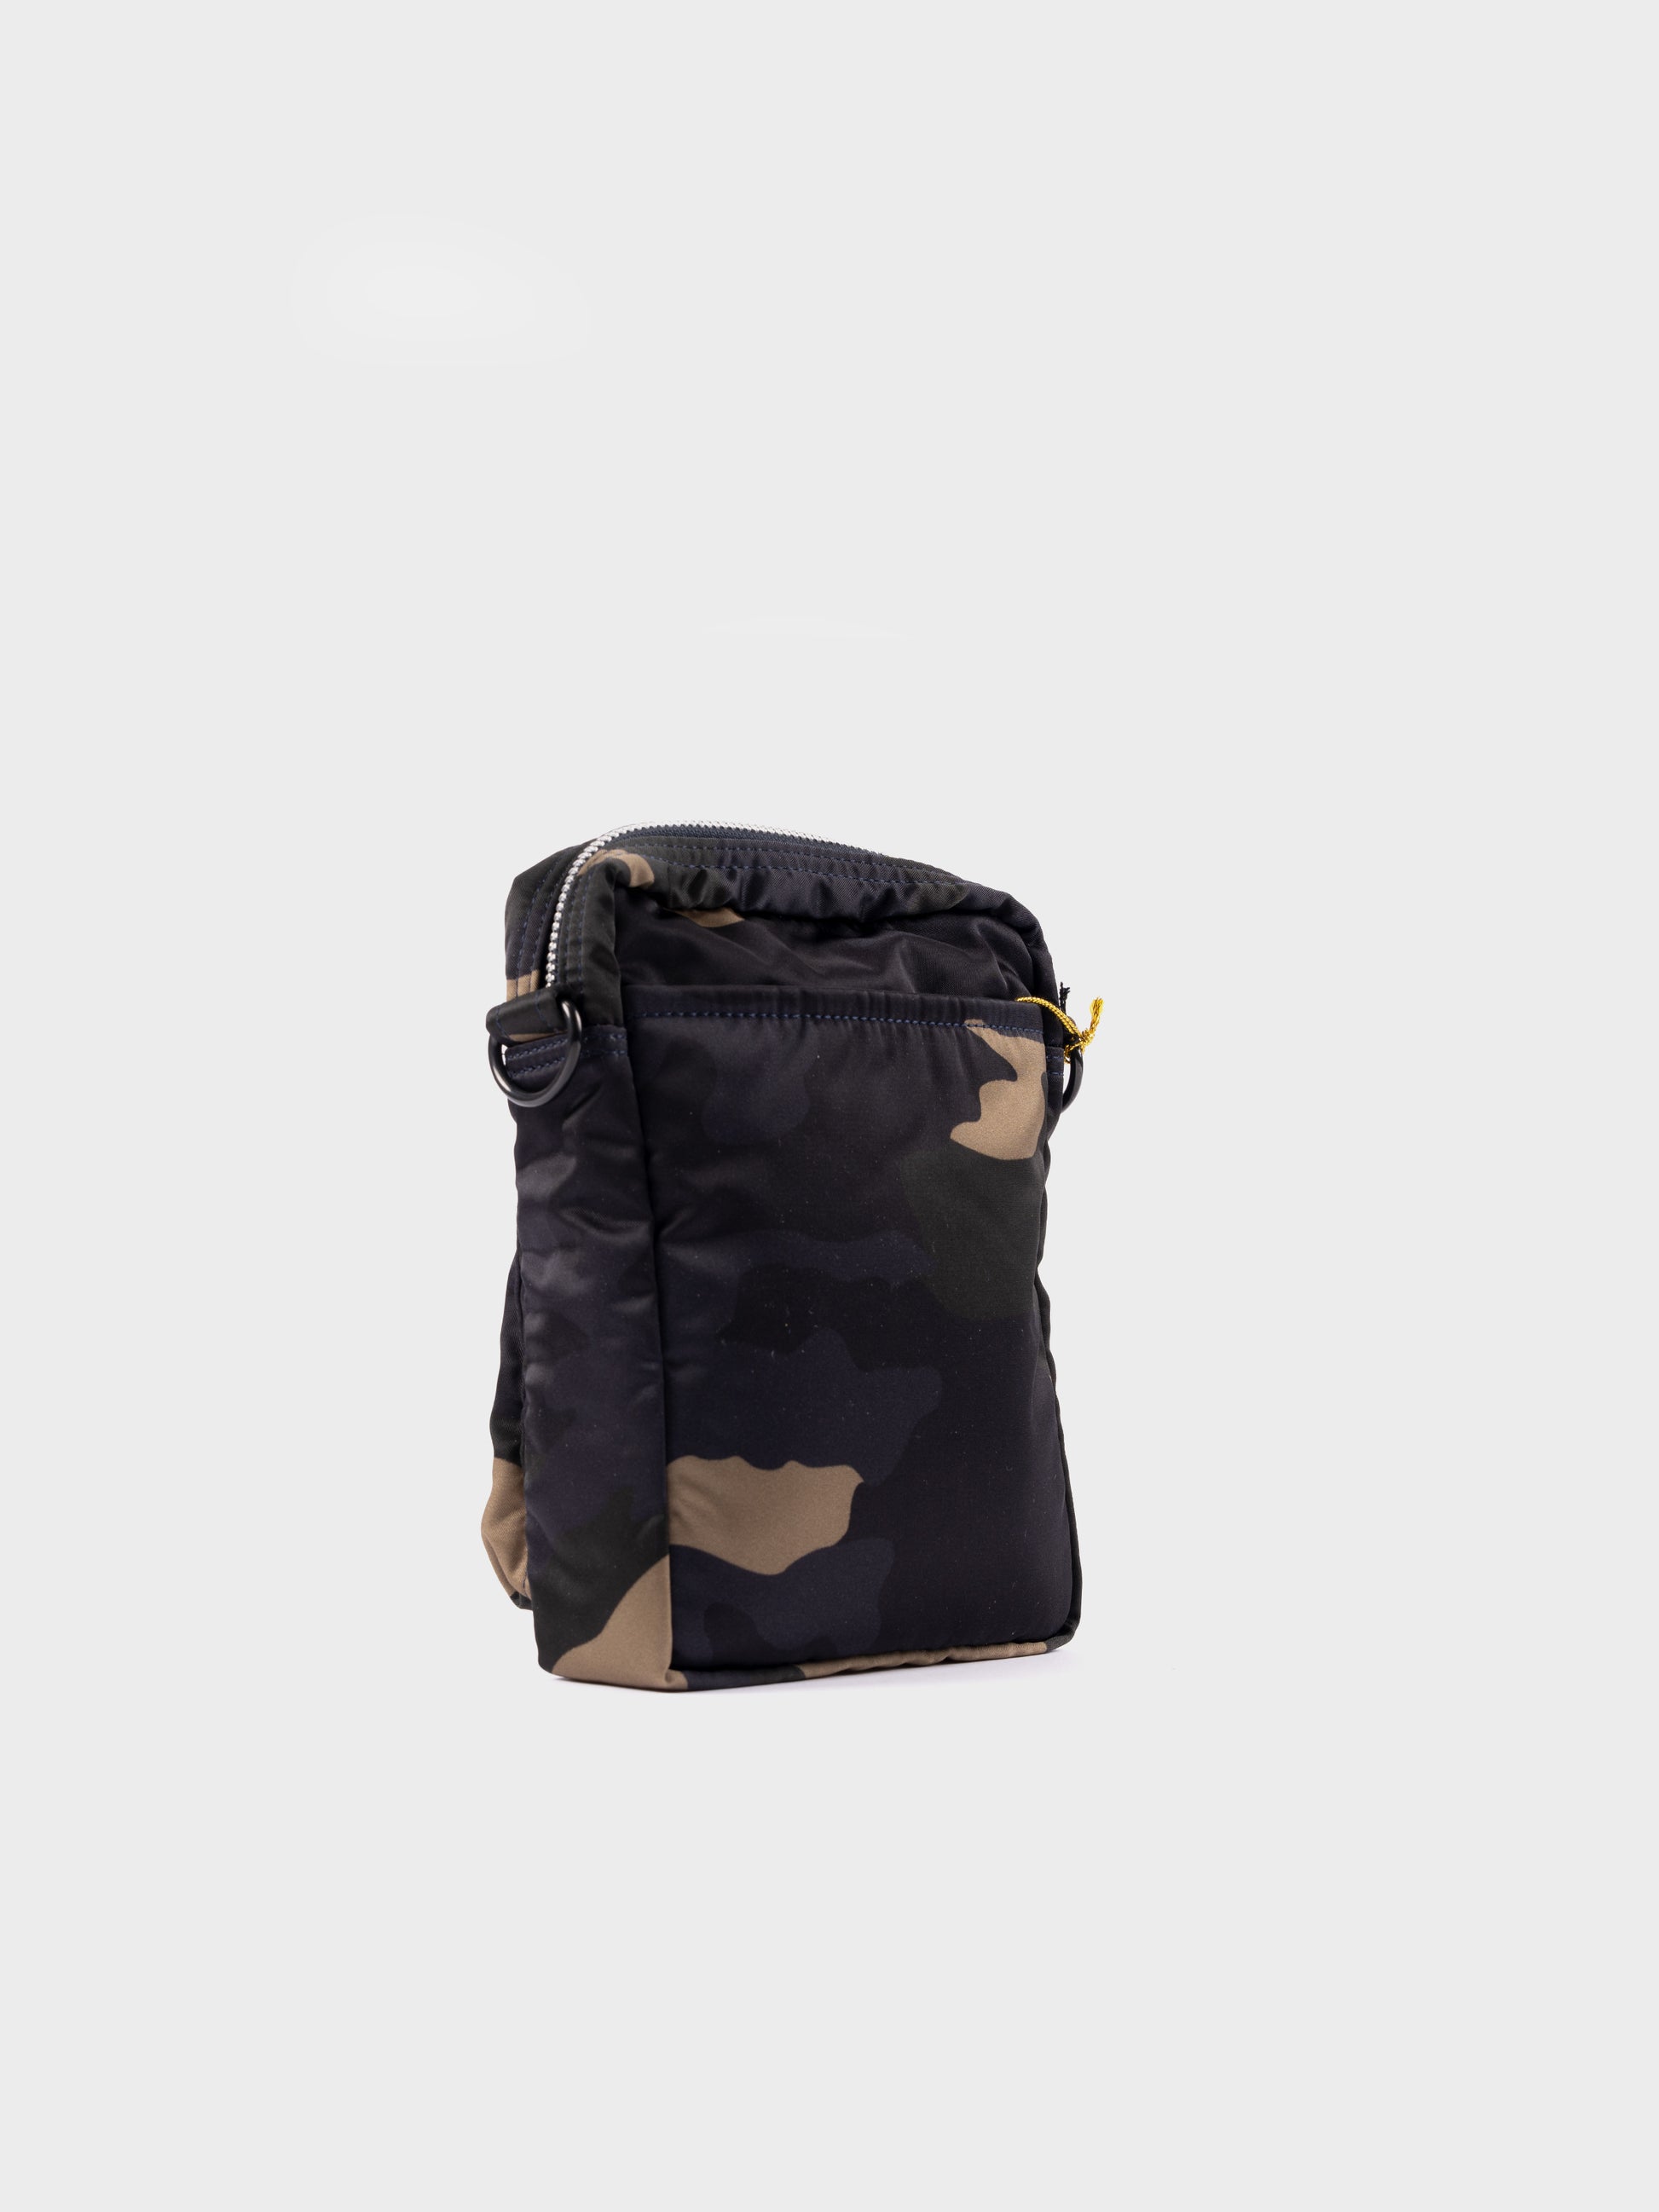 Porter-Yoshida & Co Counter Shade Vertical Shoulder Bag - Woodland Khaki